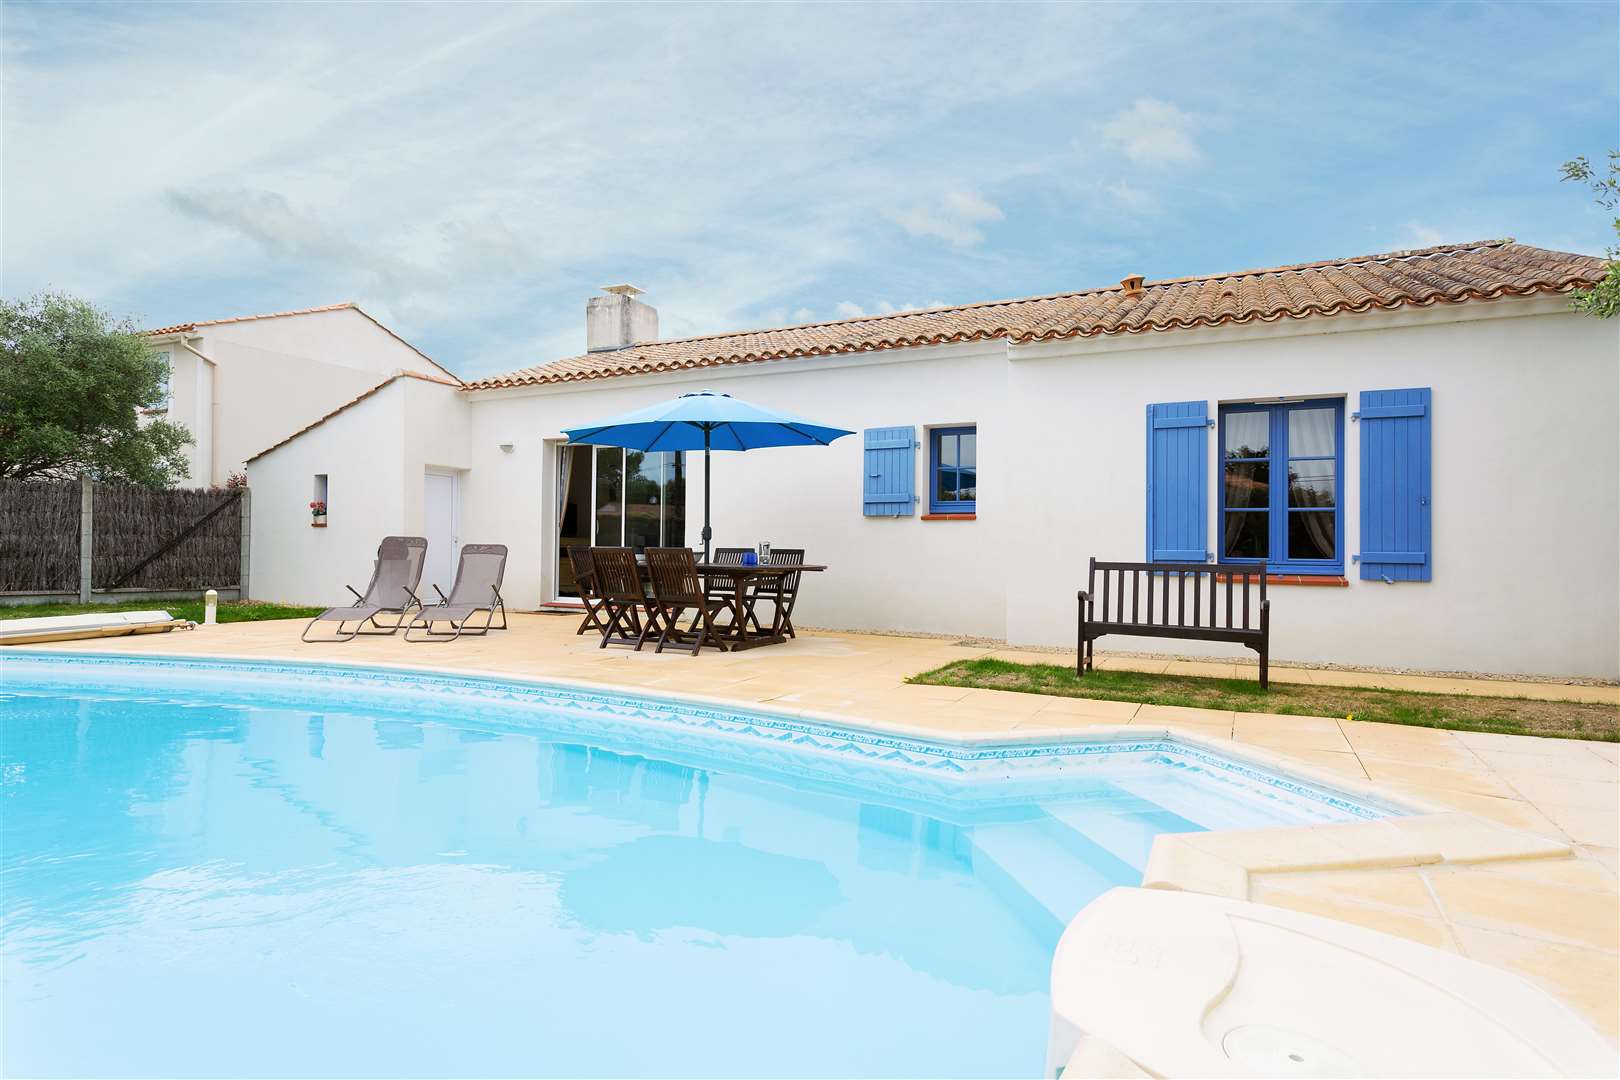 Each villa at Les Domaines de Vertmarines has a private pool